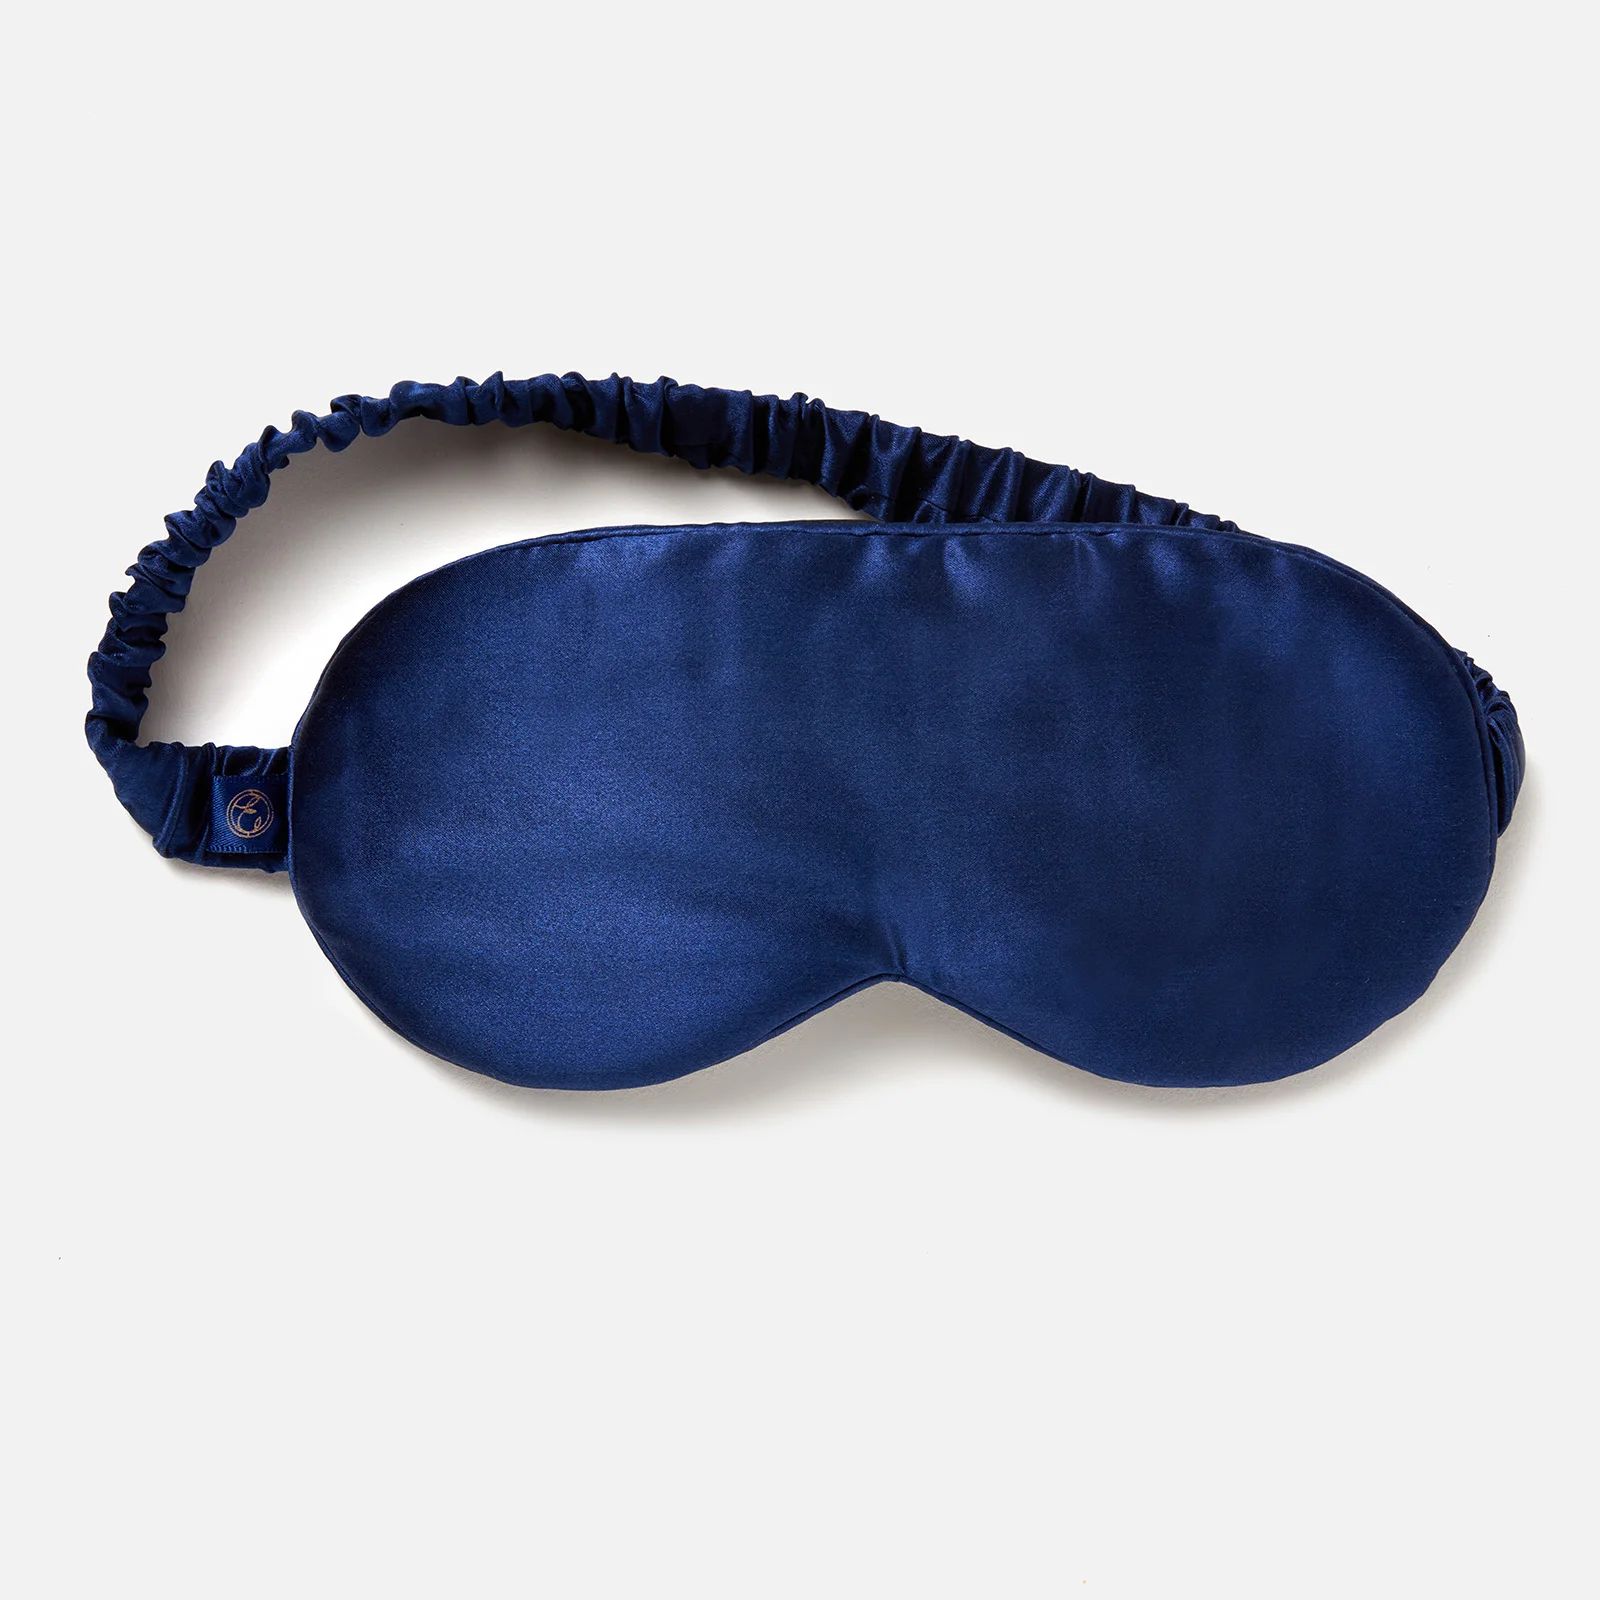 ESPA Silk Eye Mask - Navy Blue Image 1